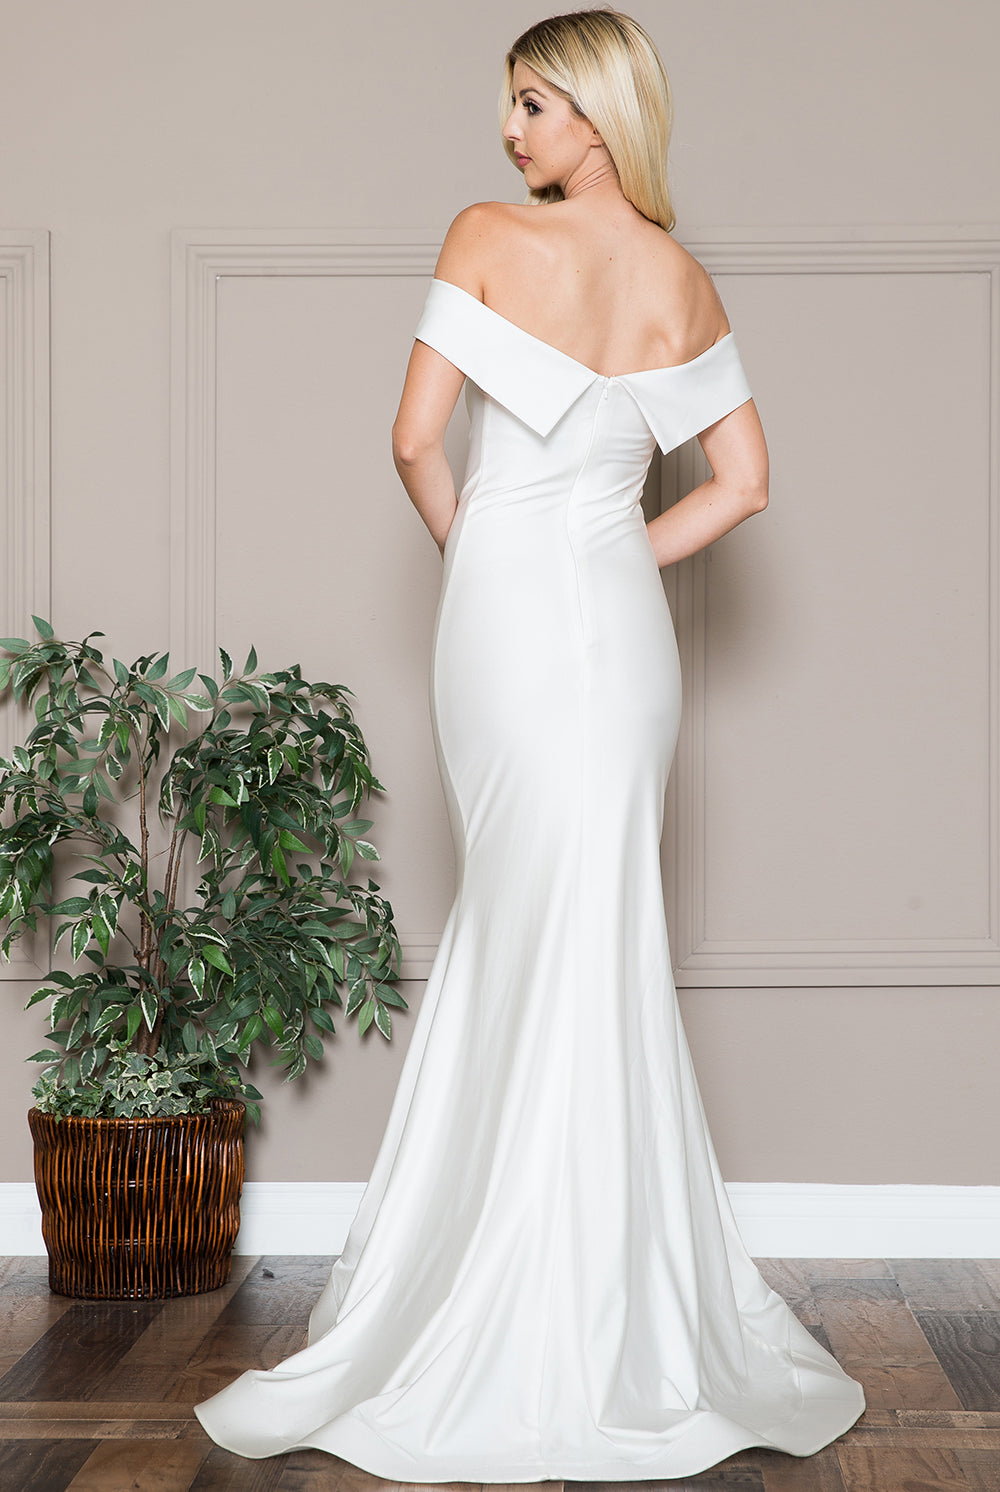 Off Shoulder Mermaid Fitted Long Evening & Wedding Dress AC373-Prom Dress-smcfashion.com